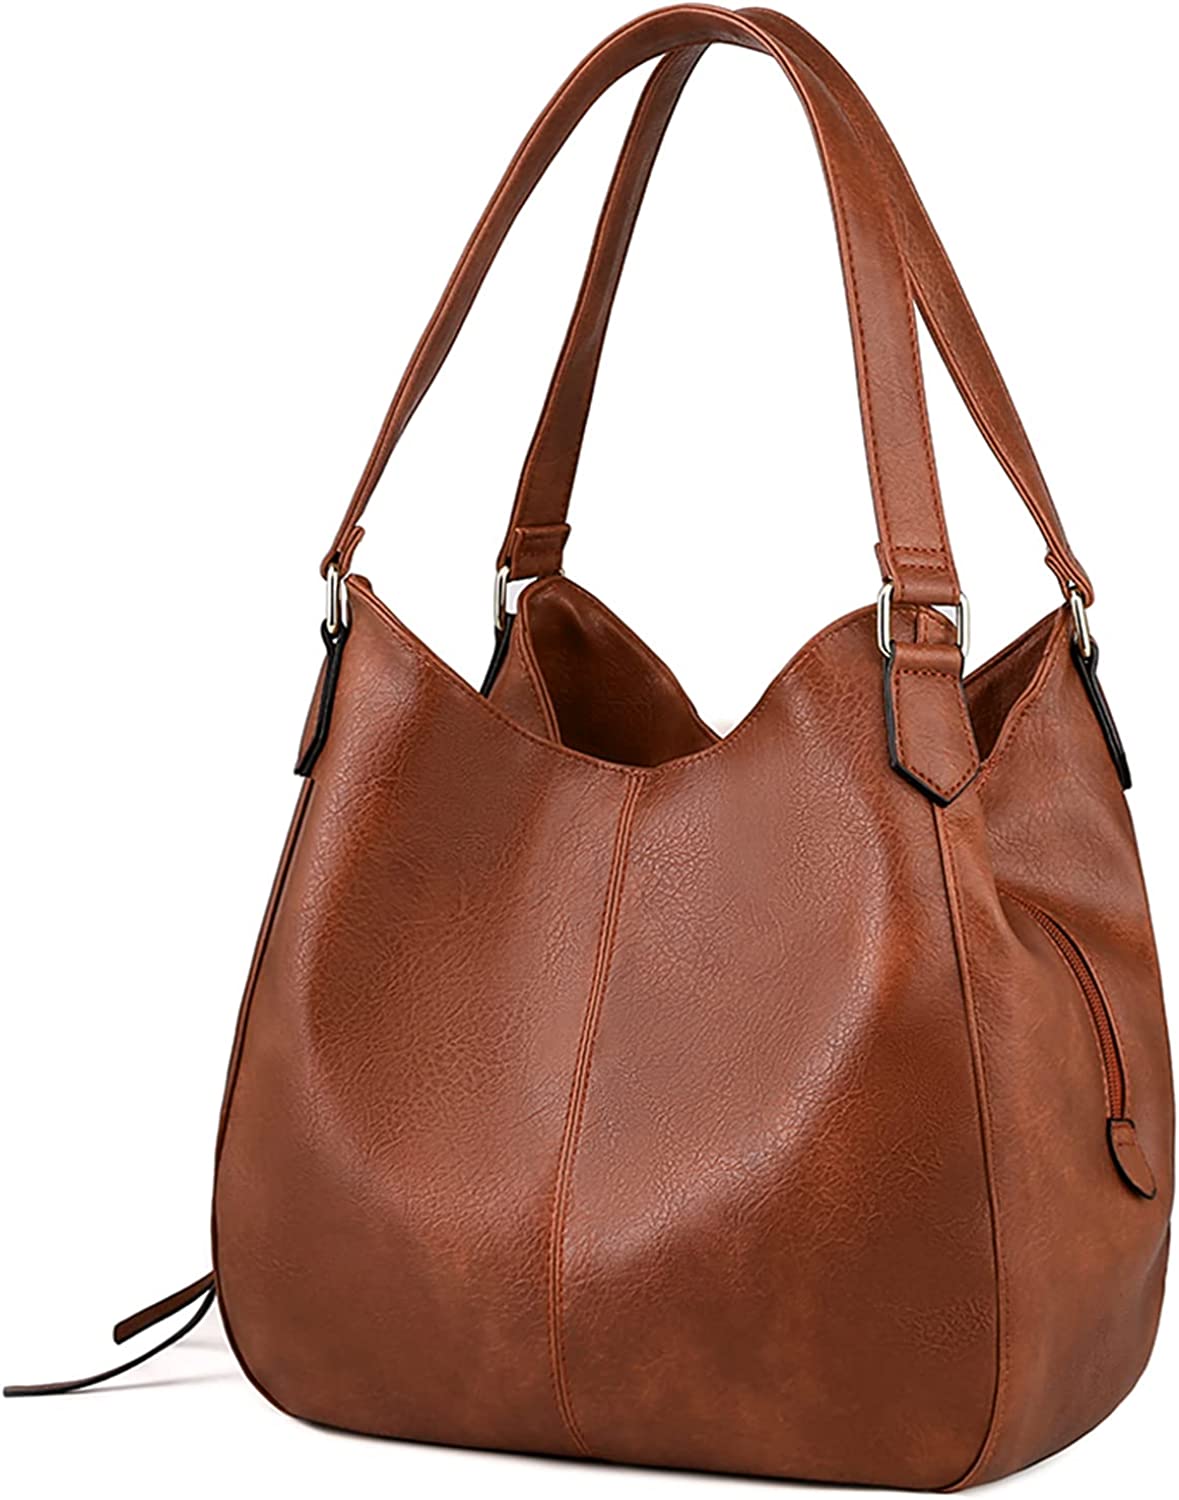 DOURR Womens Multi-pocket Shoulder Bag Fashion Cotton Canvas Handbag Tote Purse 